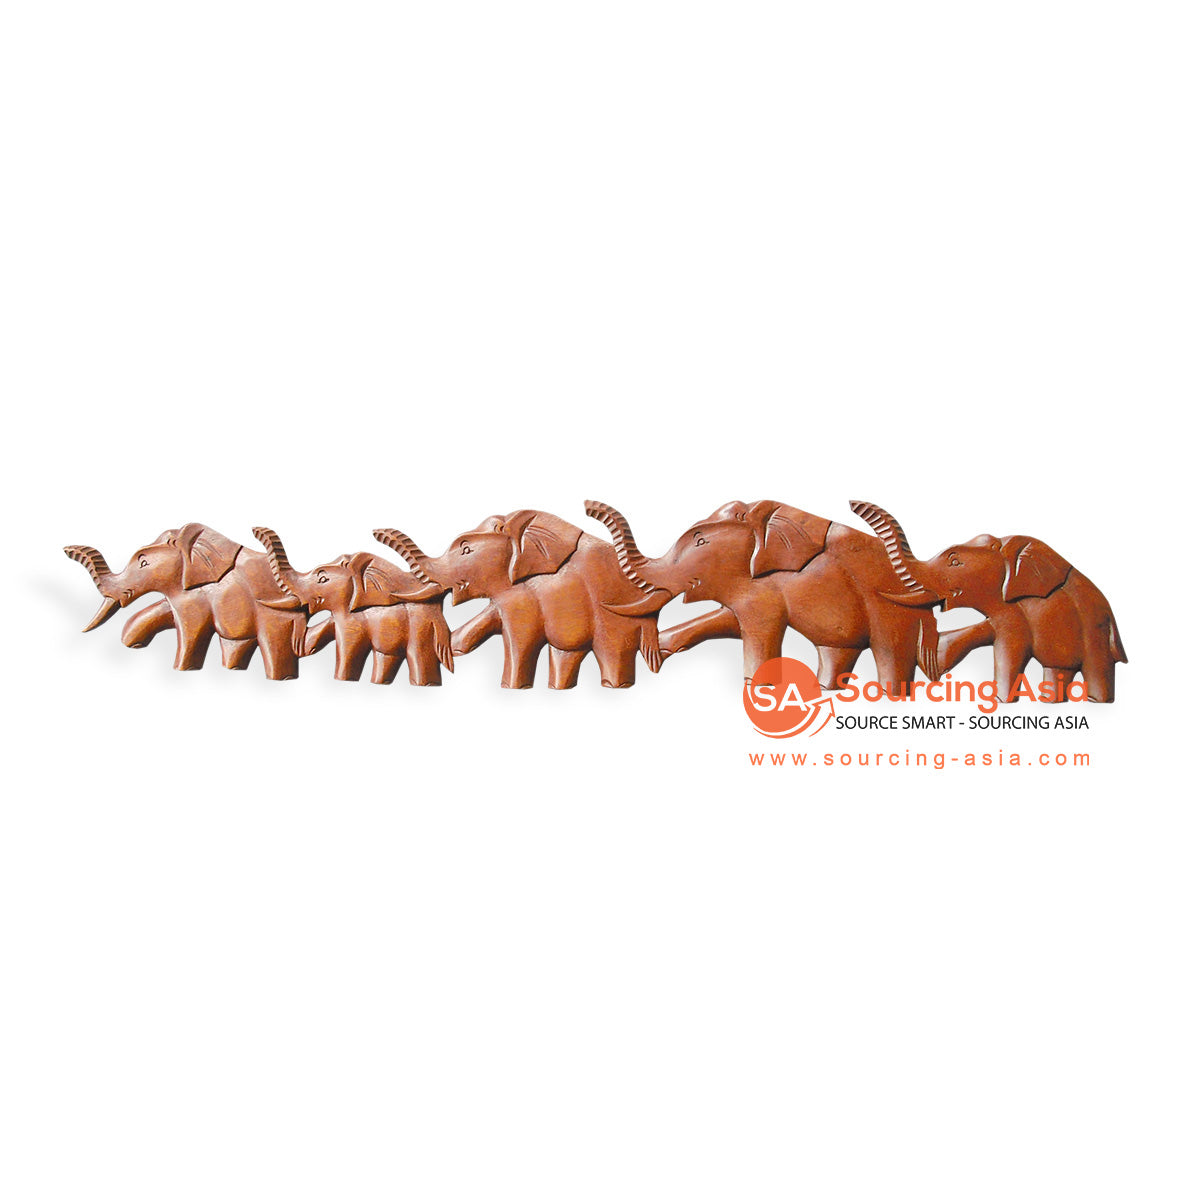 ICP29-100 BROWN WOODEN ELEPHANTS PANEL